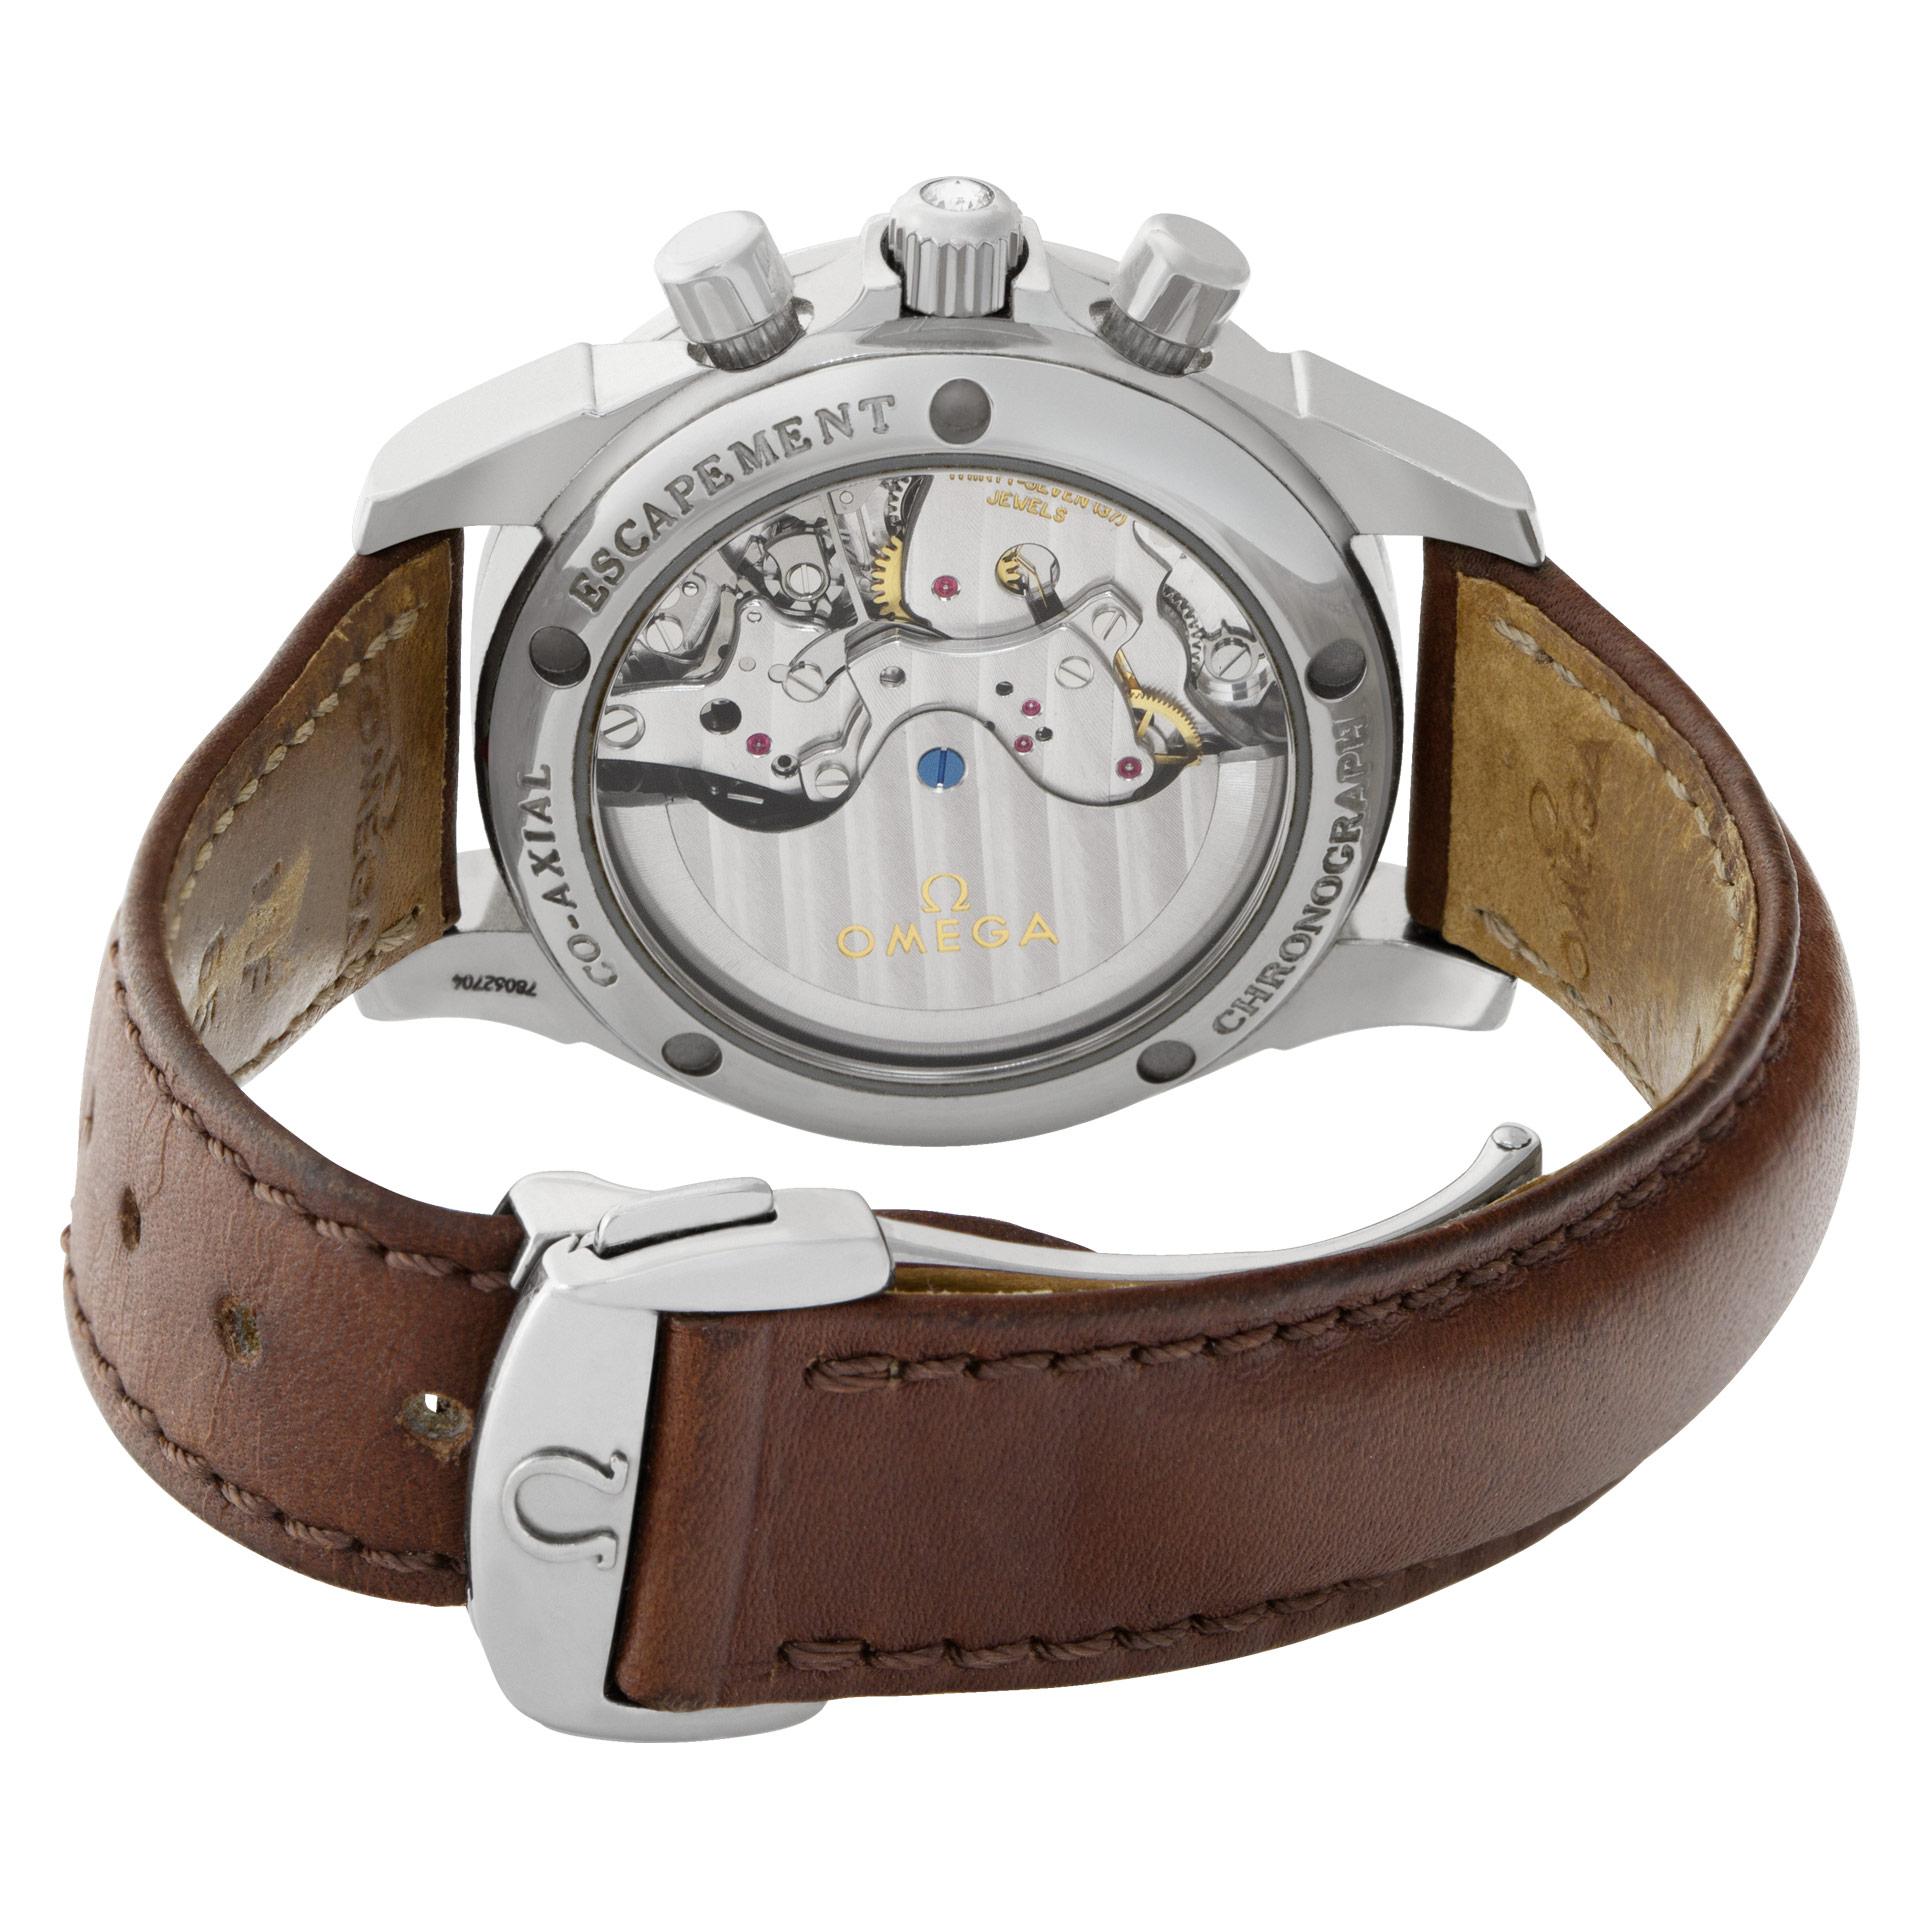 Women's Omega De Ville Ref. 4877.60.37 Watch in Stainless Steel with Original